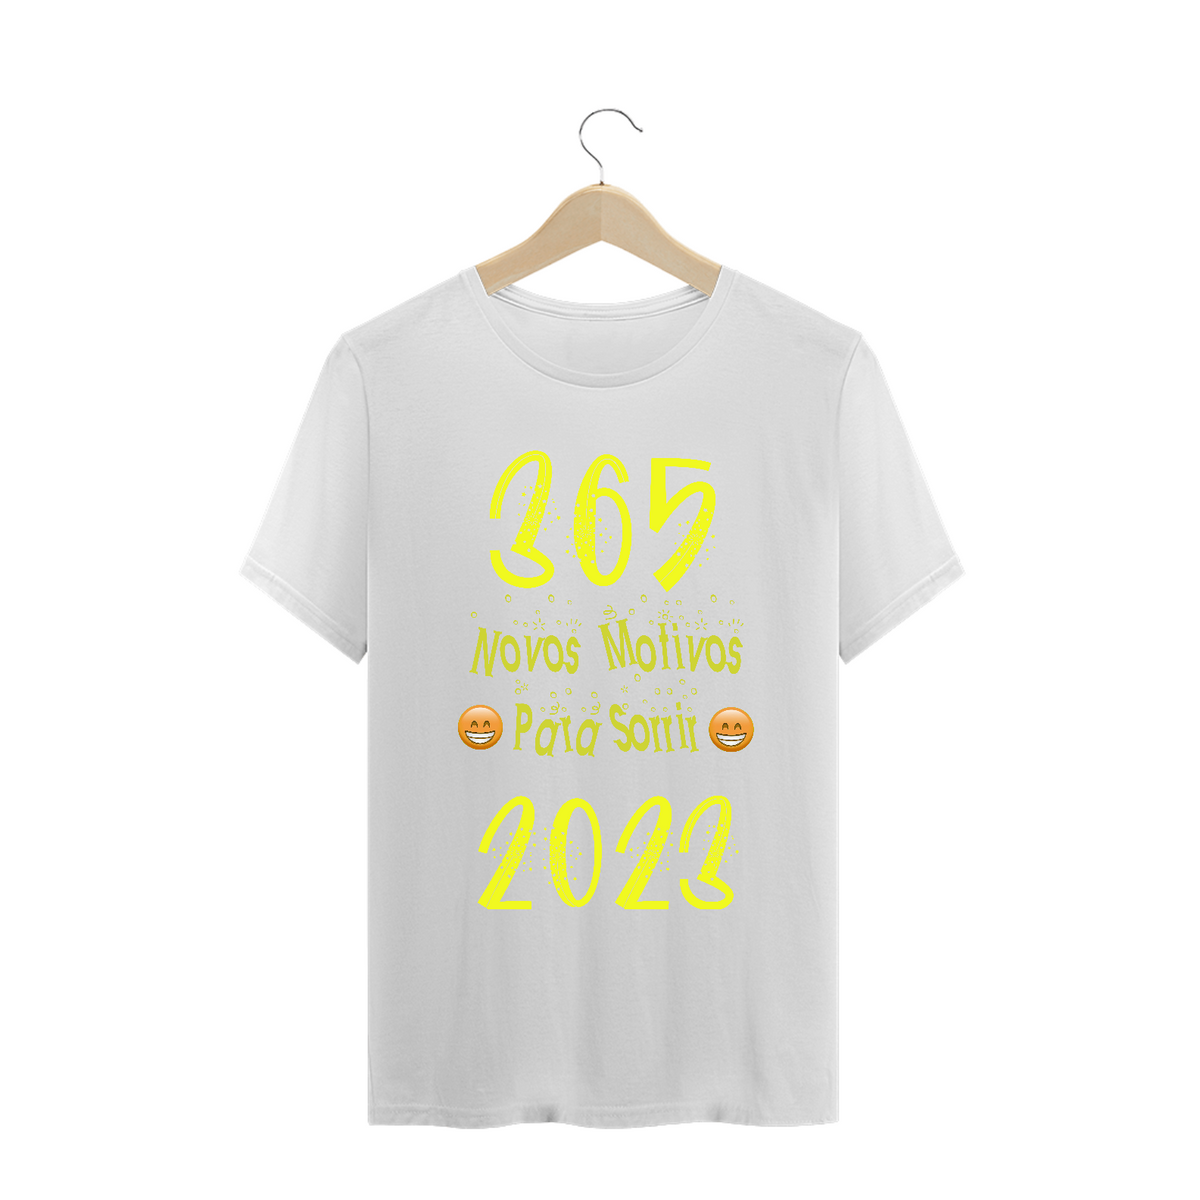 Nome do produto: Camiseta Frase 365 Novos Motivos Para Sorrir 2023